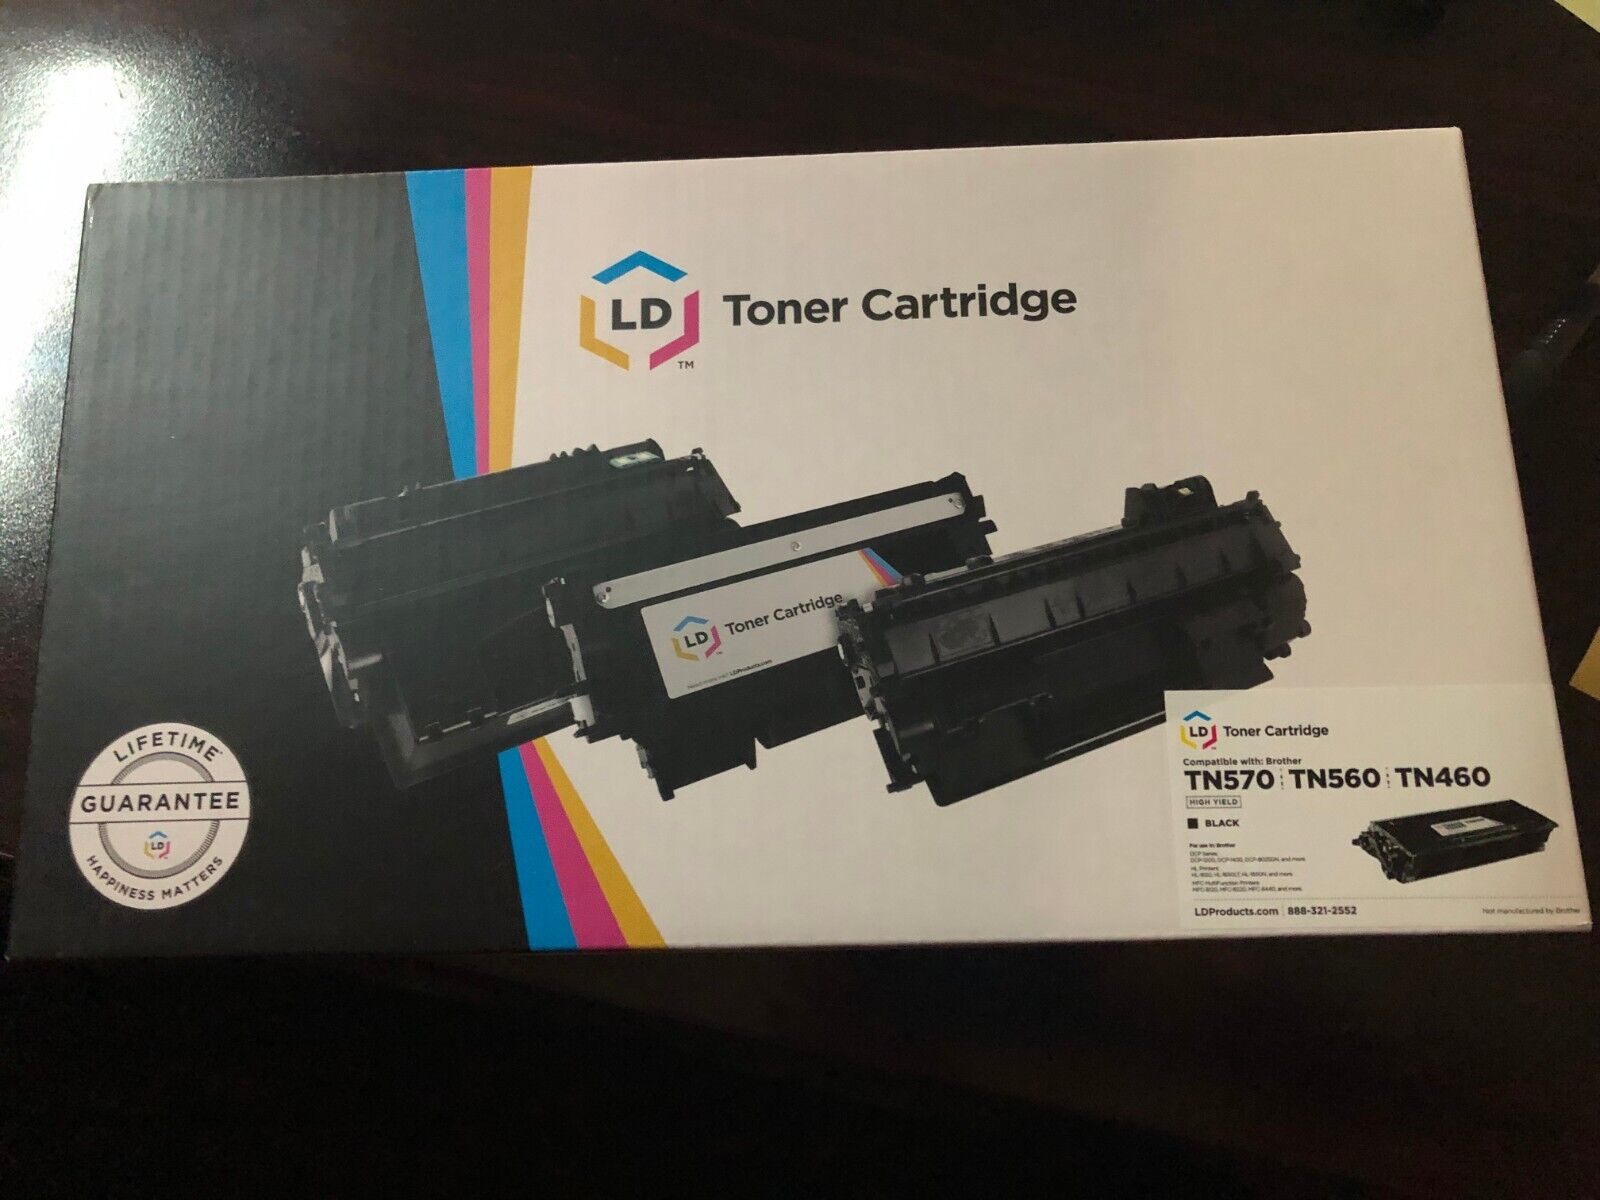 LD Toner Cartridge TN 460 560 570 580 650 TNP 24 Black High Yield New Sealed